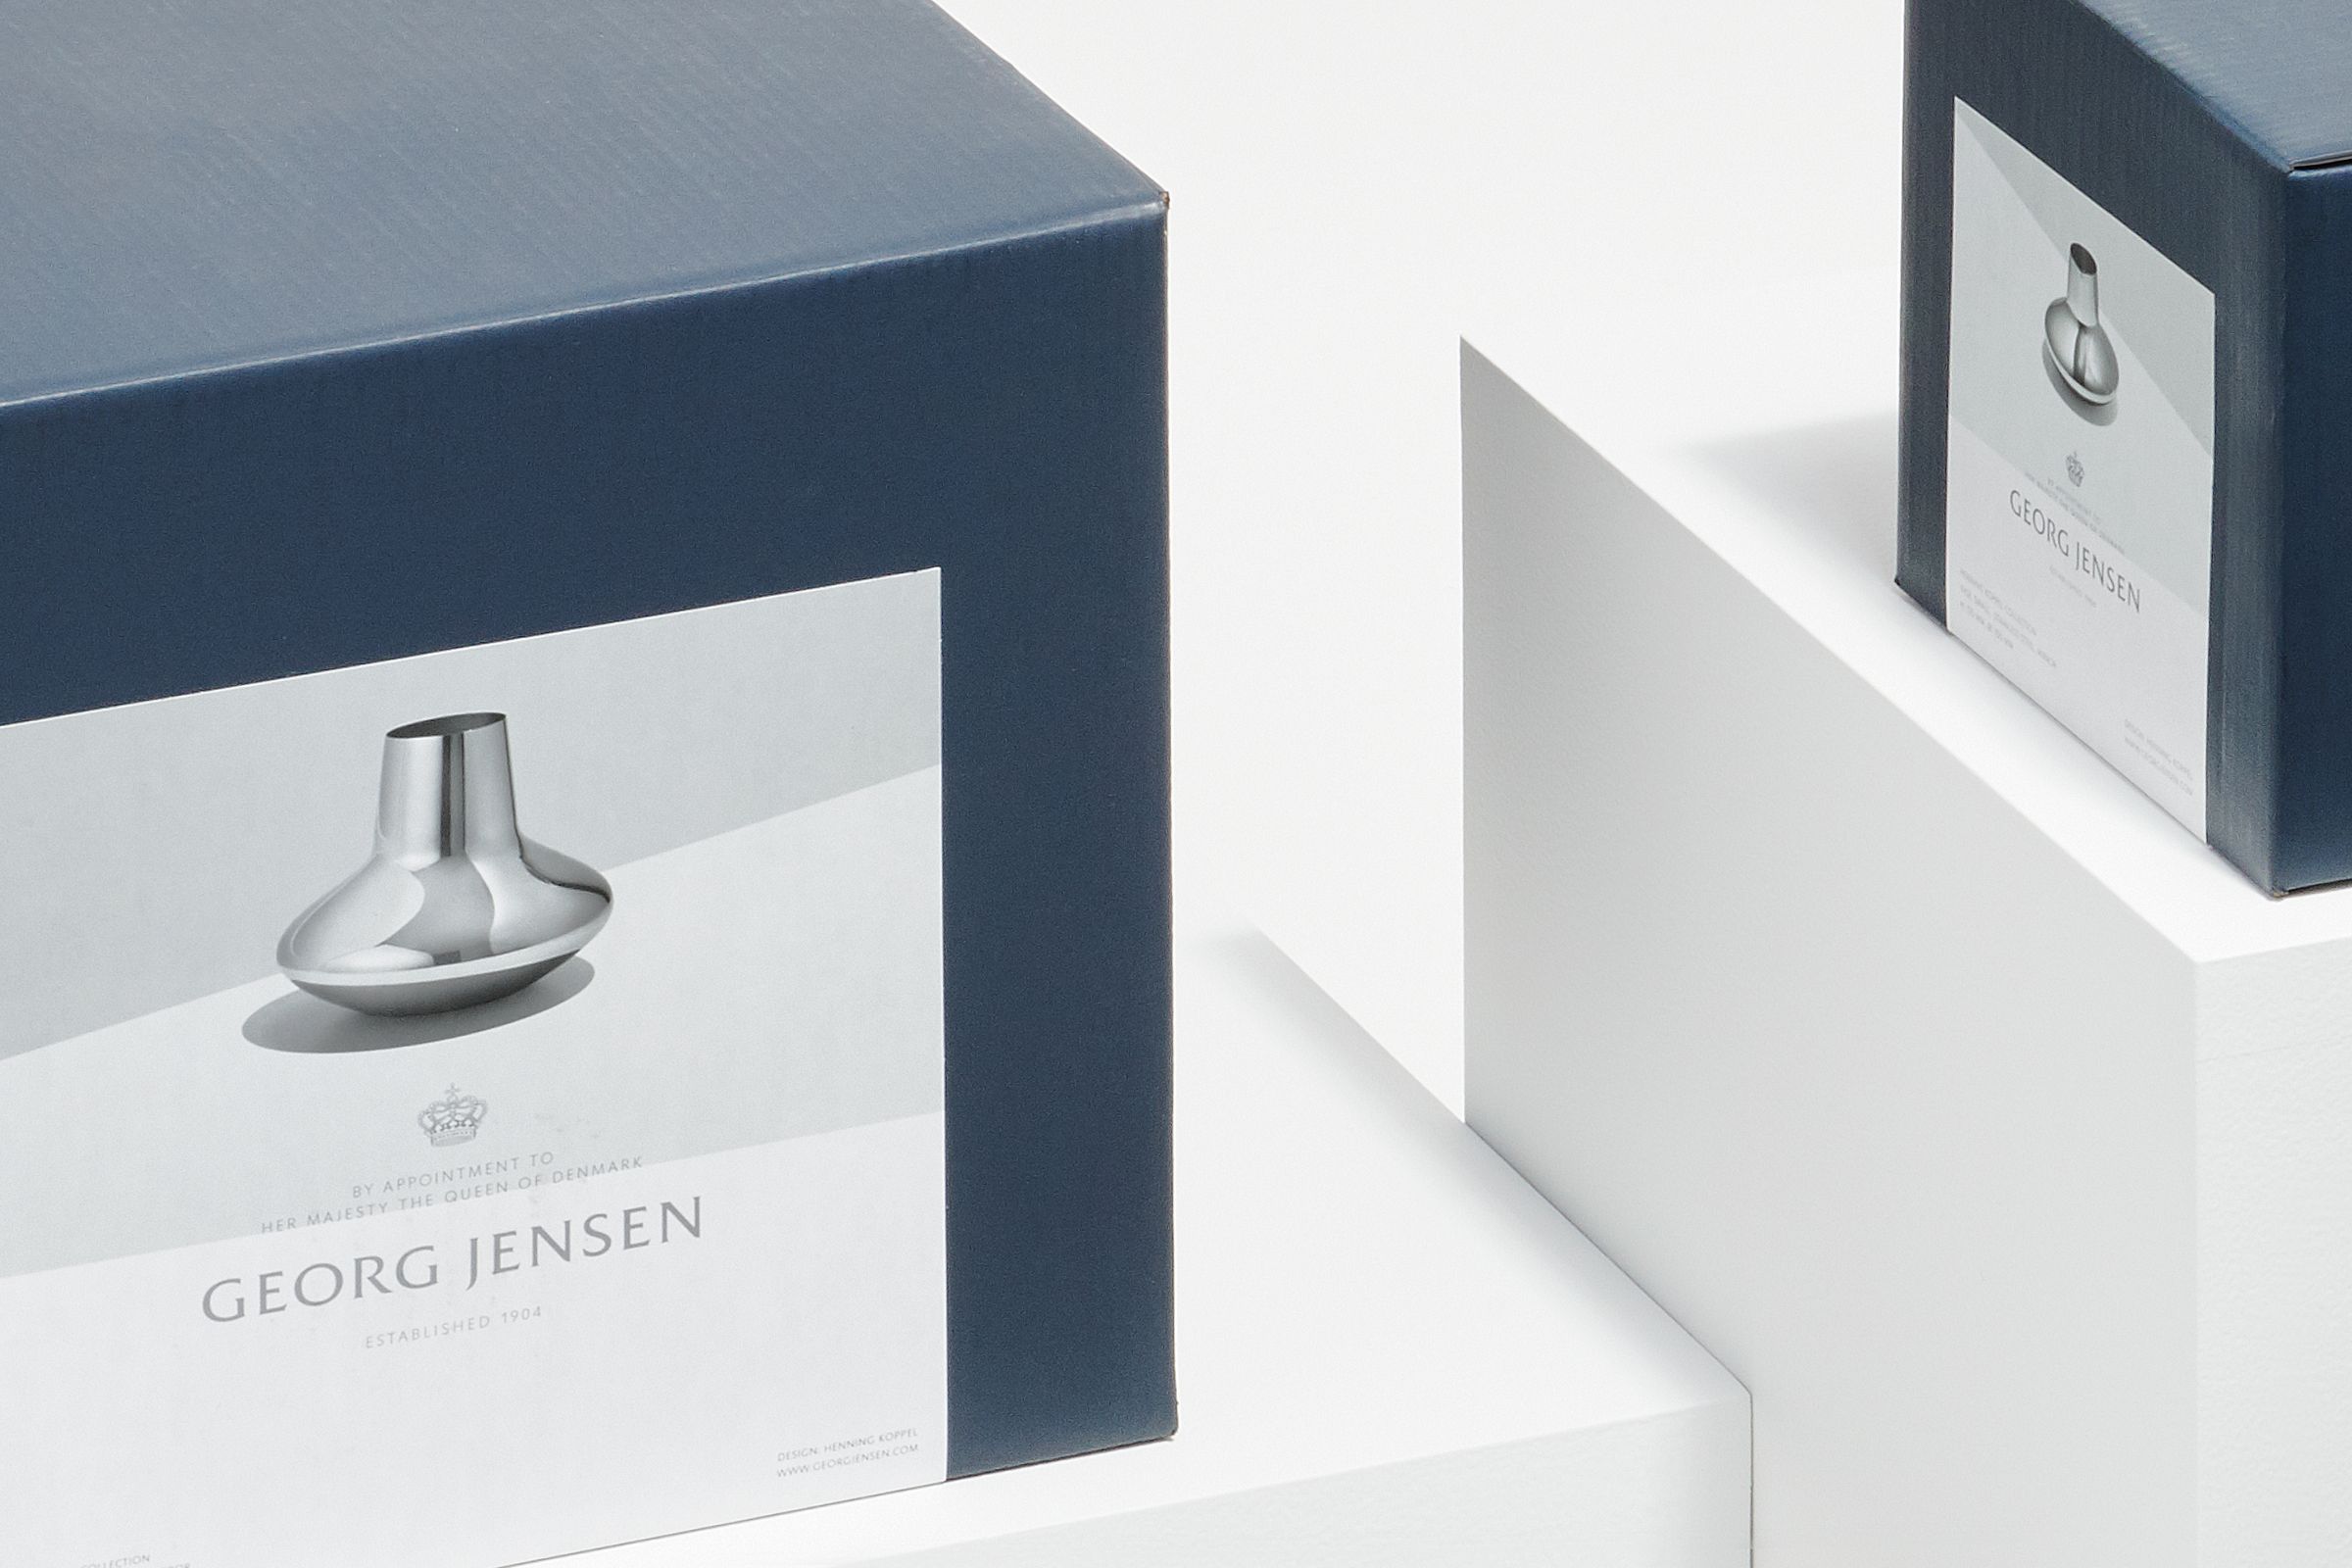 Georg Jensen packaging design detail